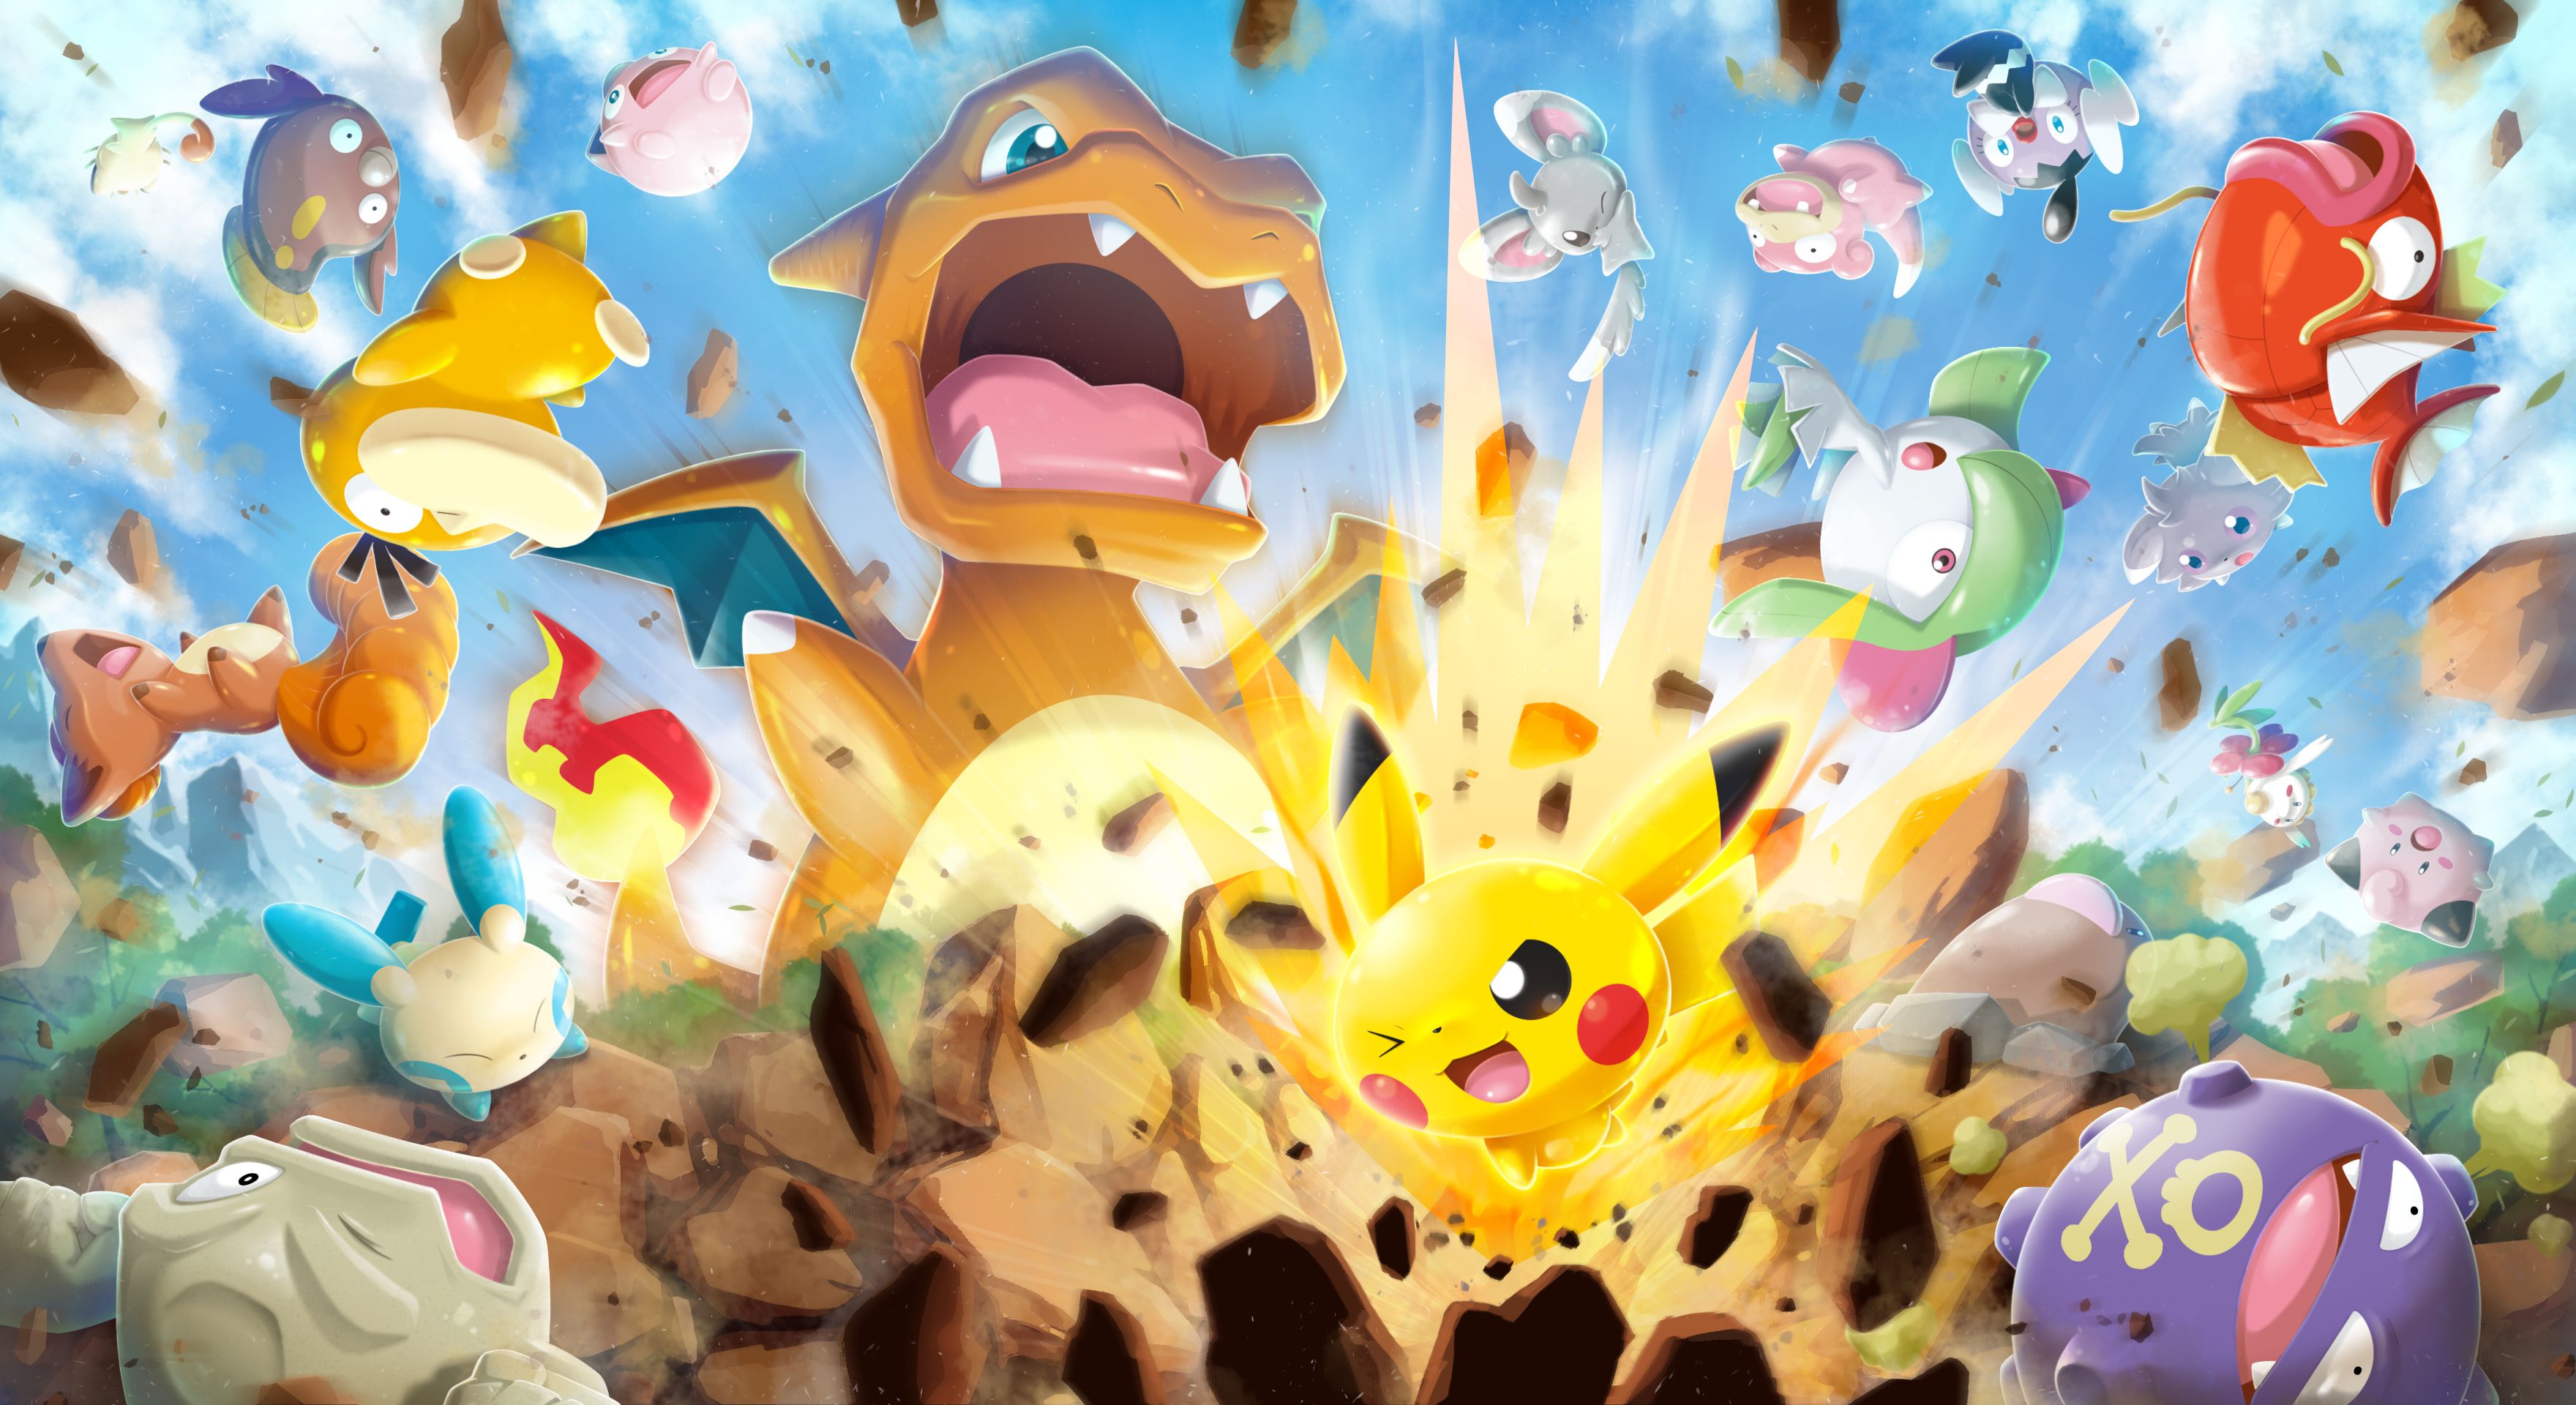 Jigglypuff  Pokémon  Mobile Wallpaper by Ruria 2006822  Zerochan Anime  Image Board Mobile